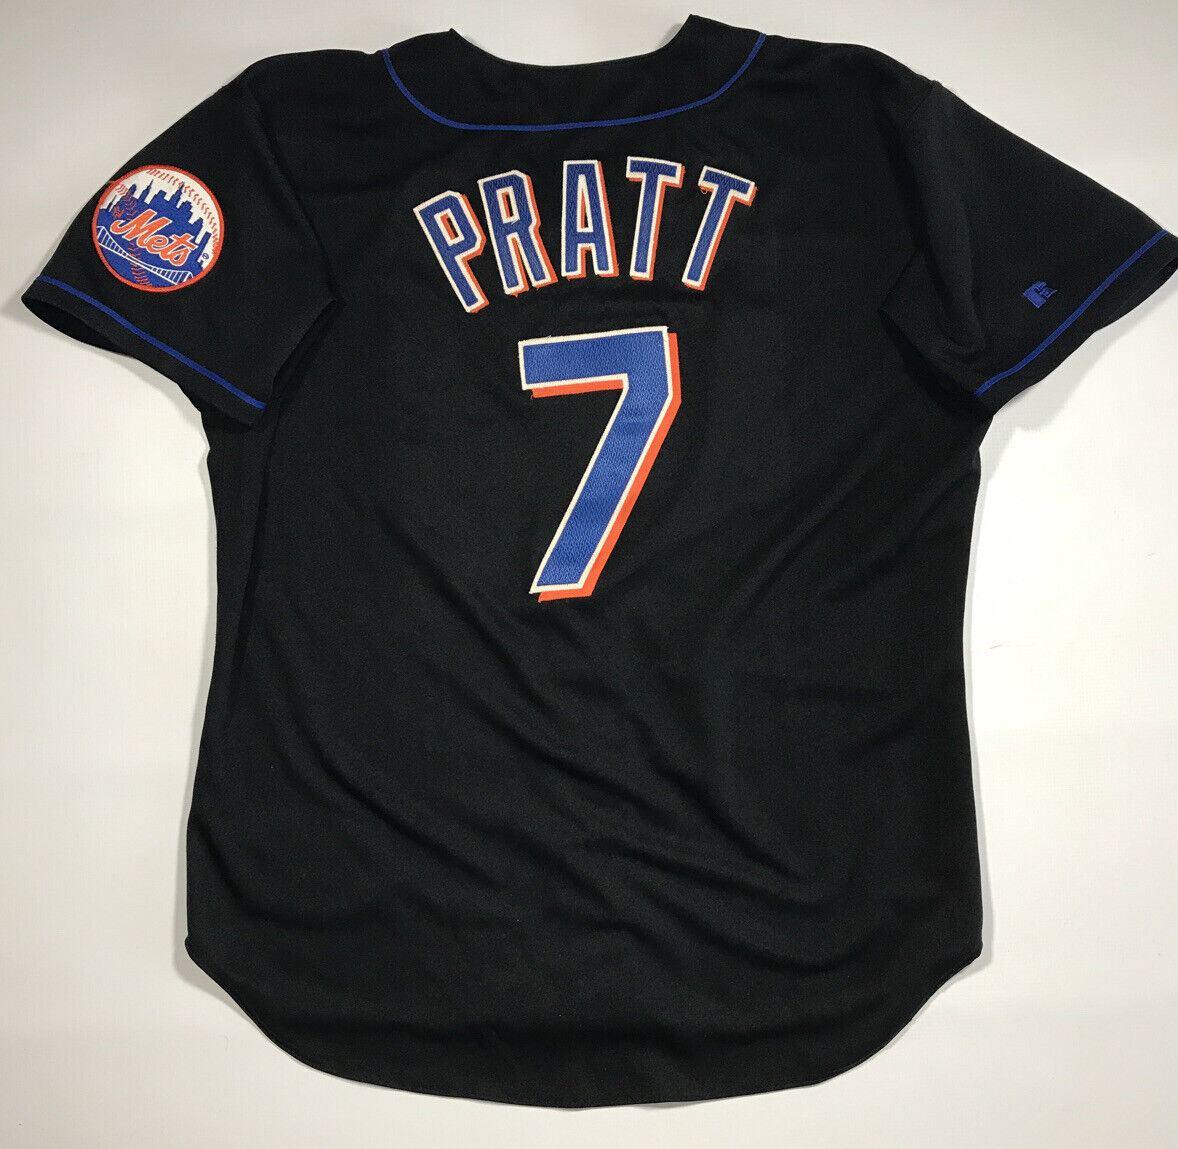 Circa 1998 New York Mets Todd Pratt Game Used Issued Jersey